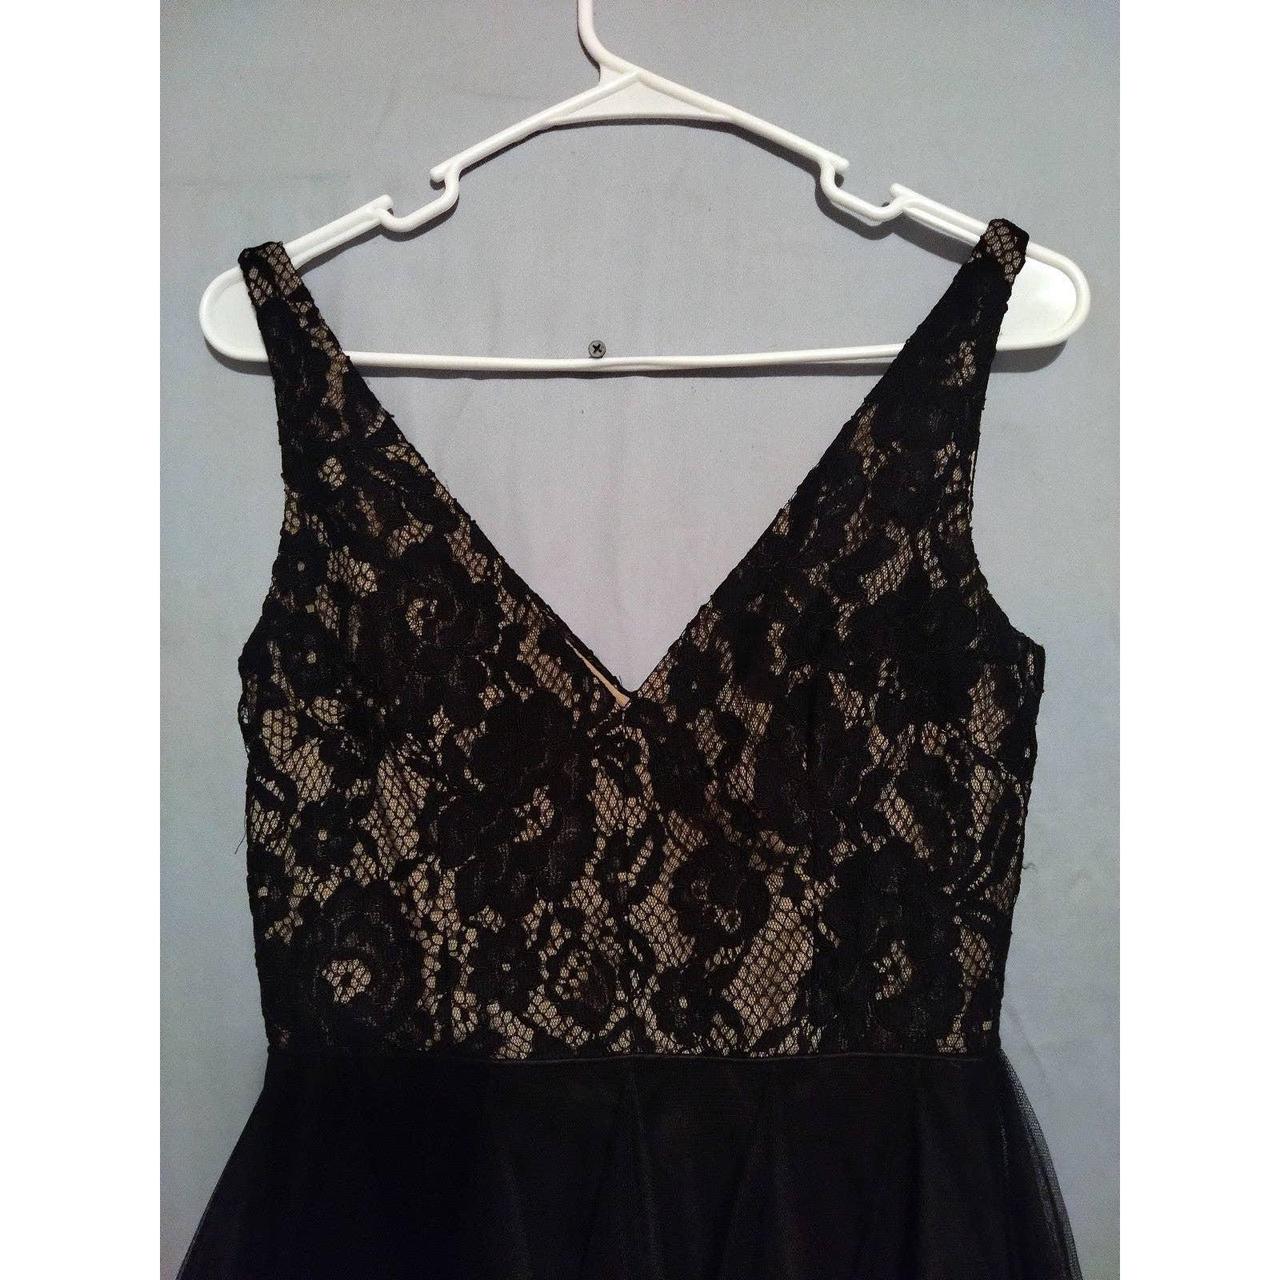 Product Image 2 - Aidan Mattox Black Maxi Dress.